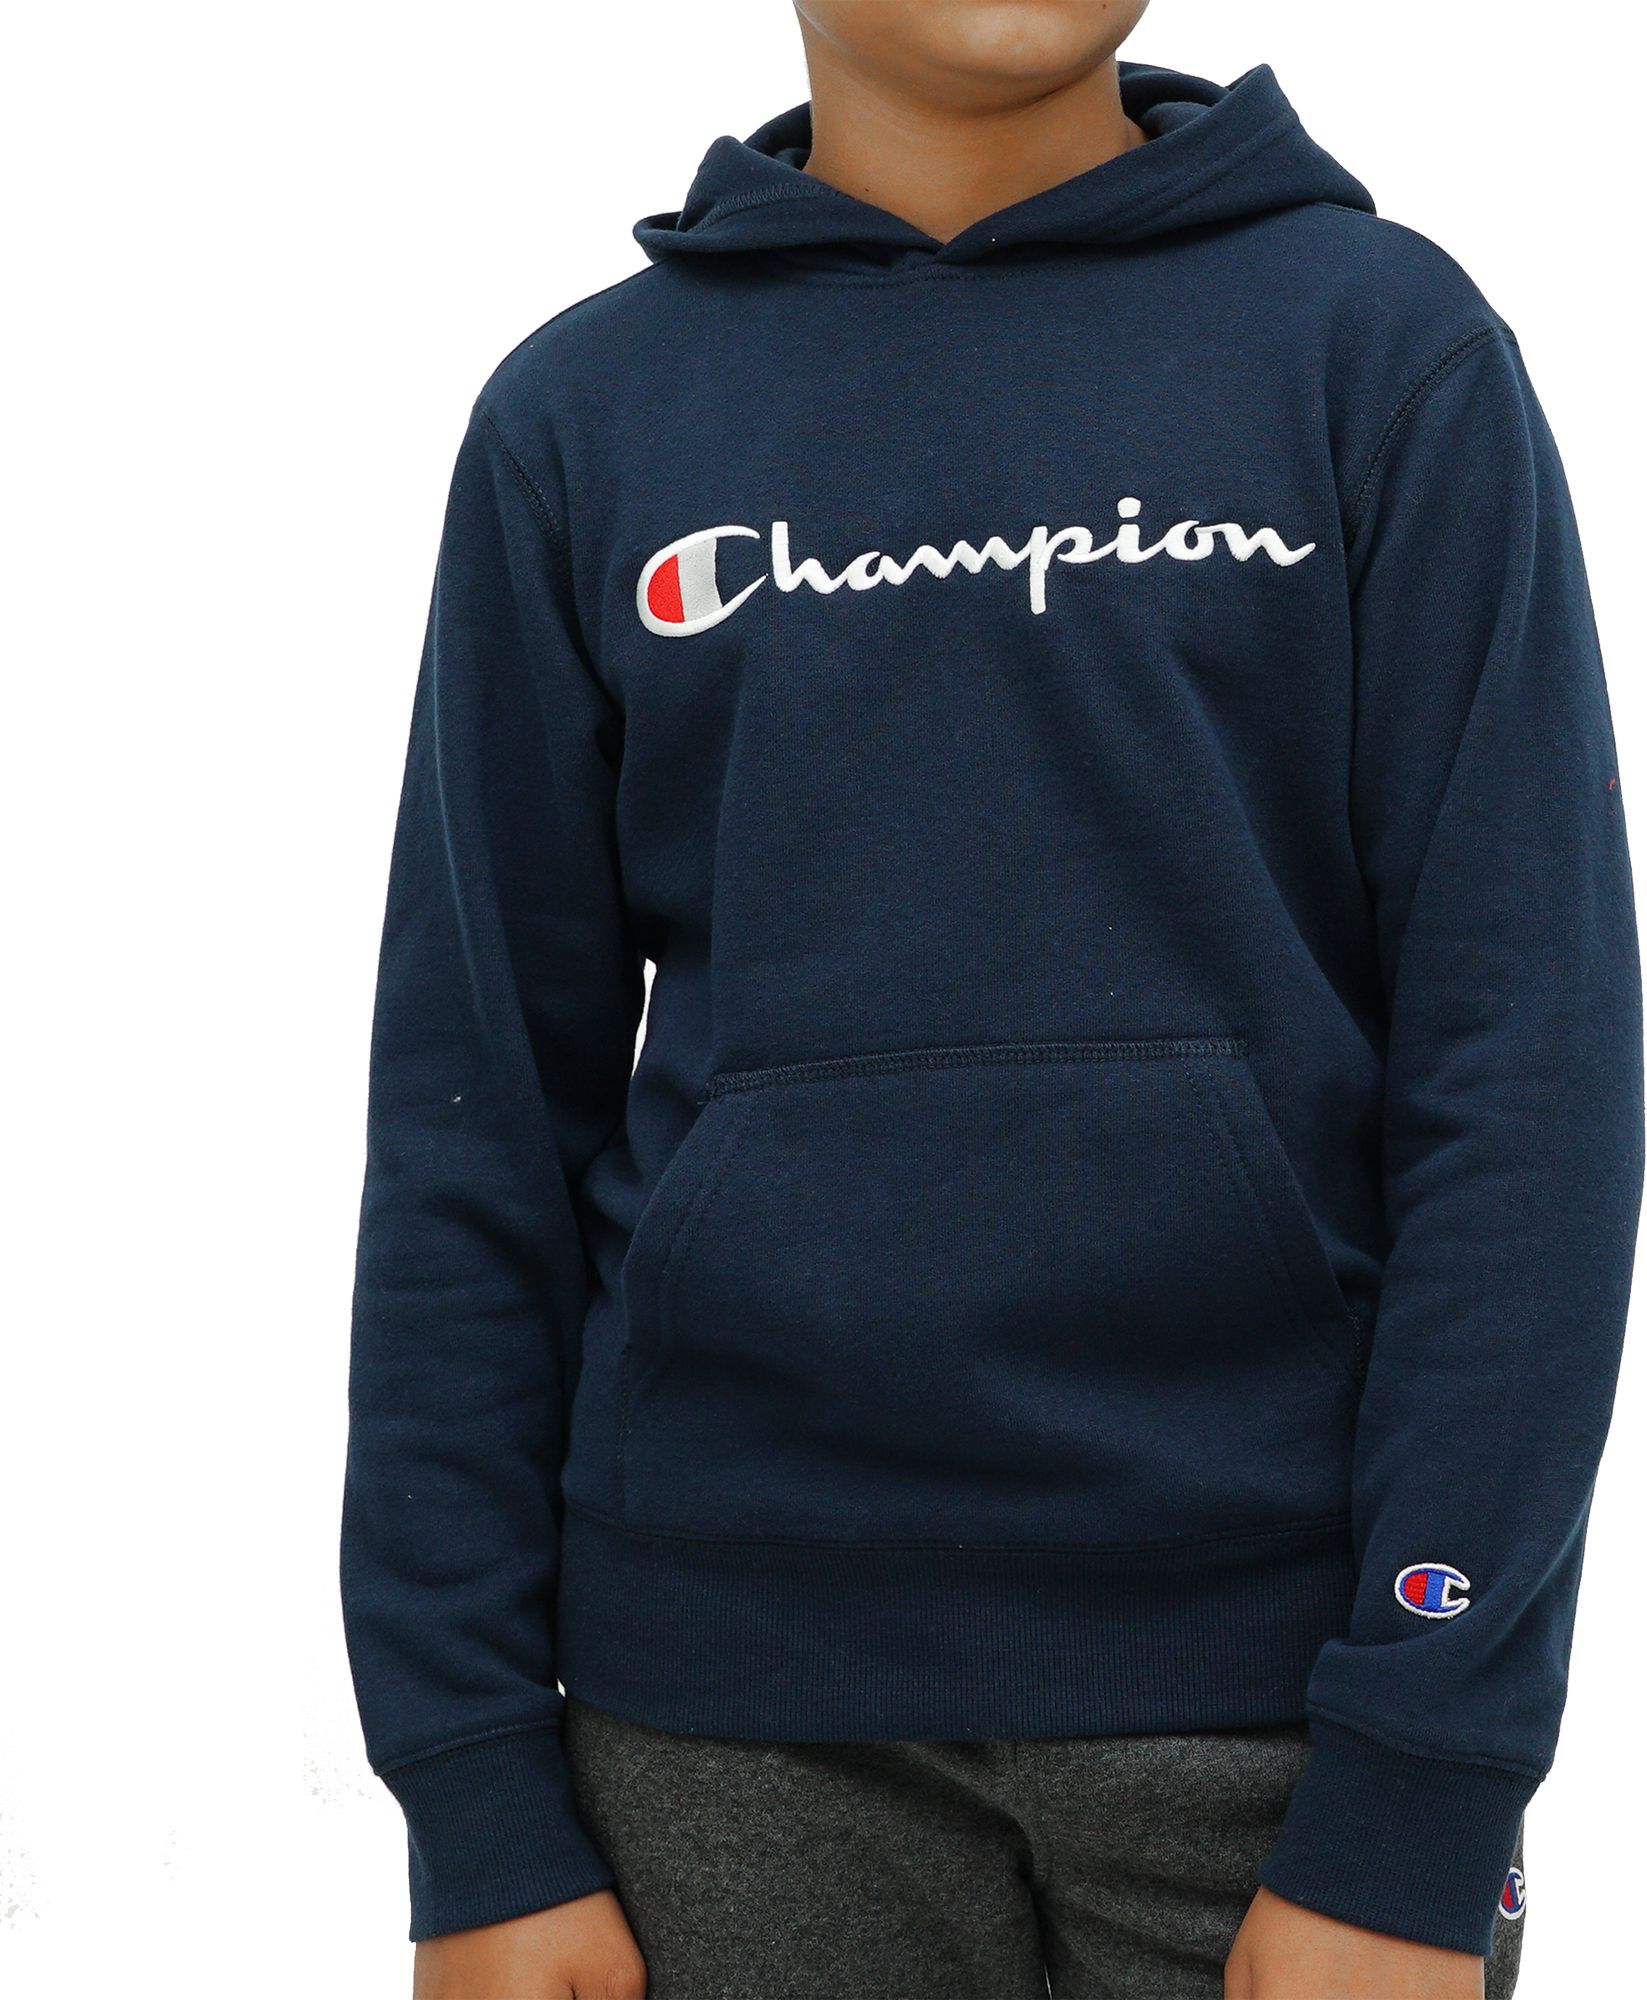 dicks champion hoodies